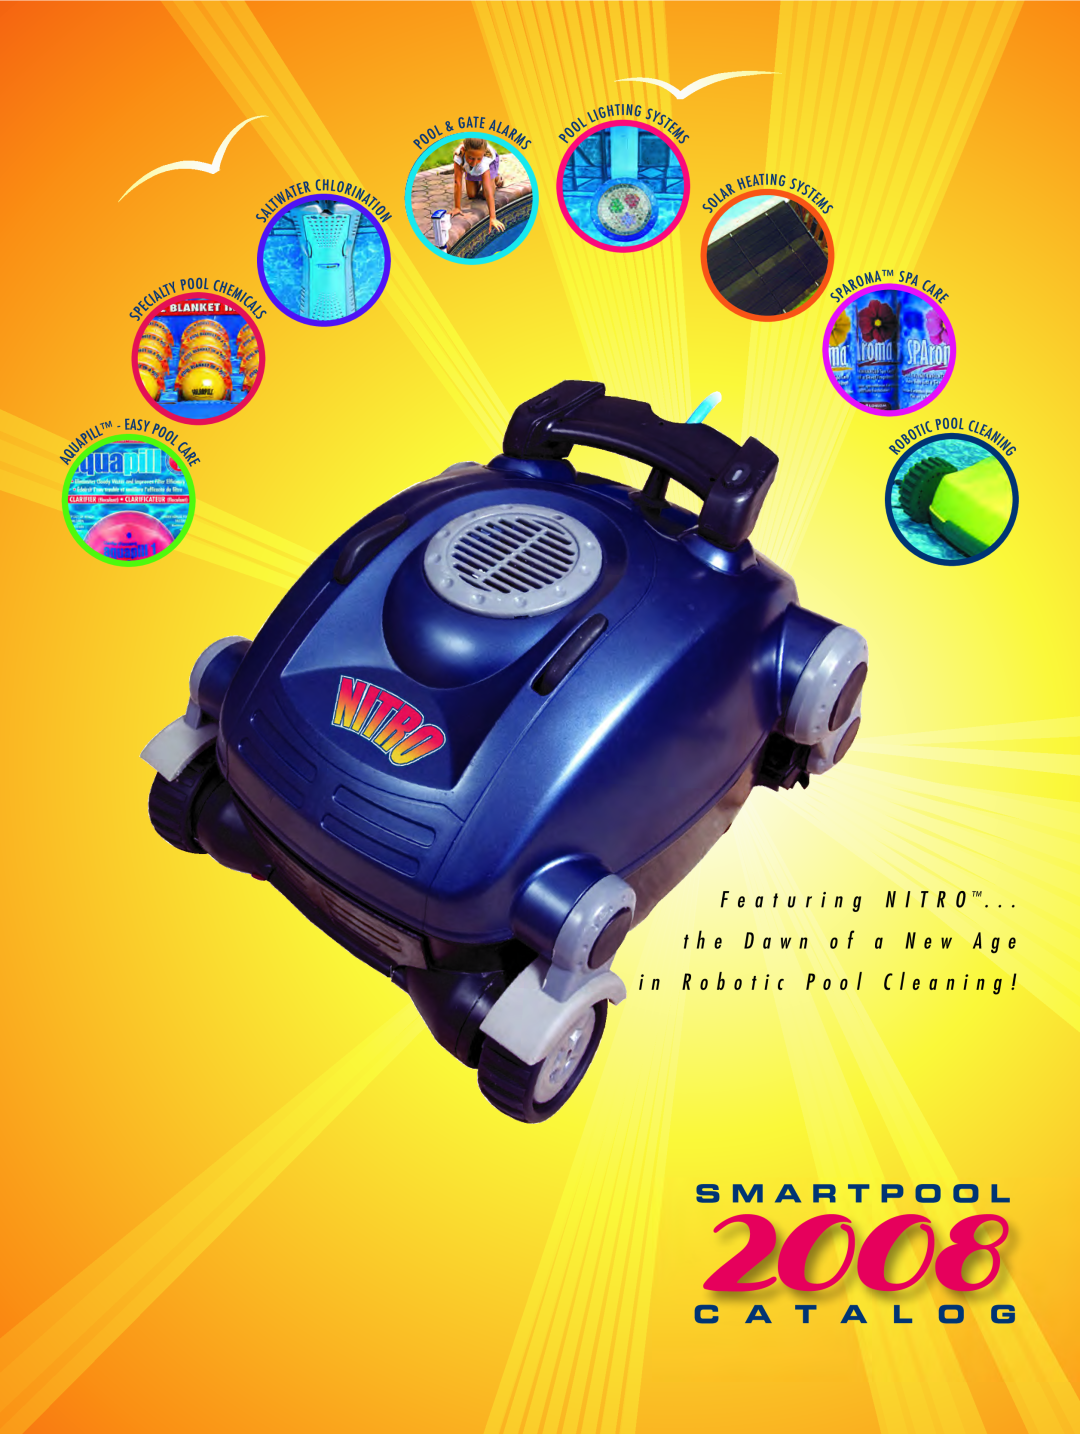 SmartPool Inc NC31 manual Sm Ar Tpo O L, Ca Tal Og, 2008, Nitr, D awn, le an, i n g, turing, A ge 